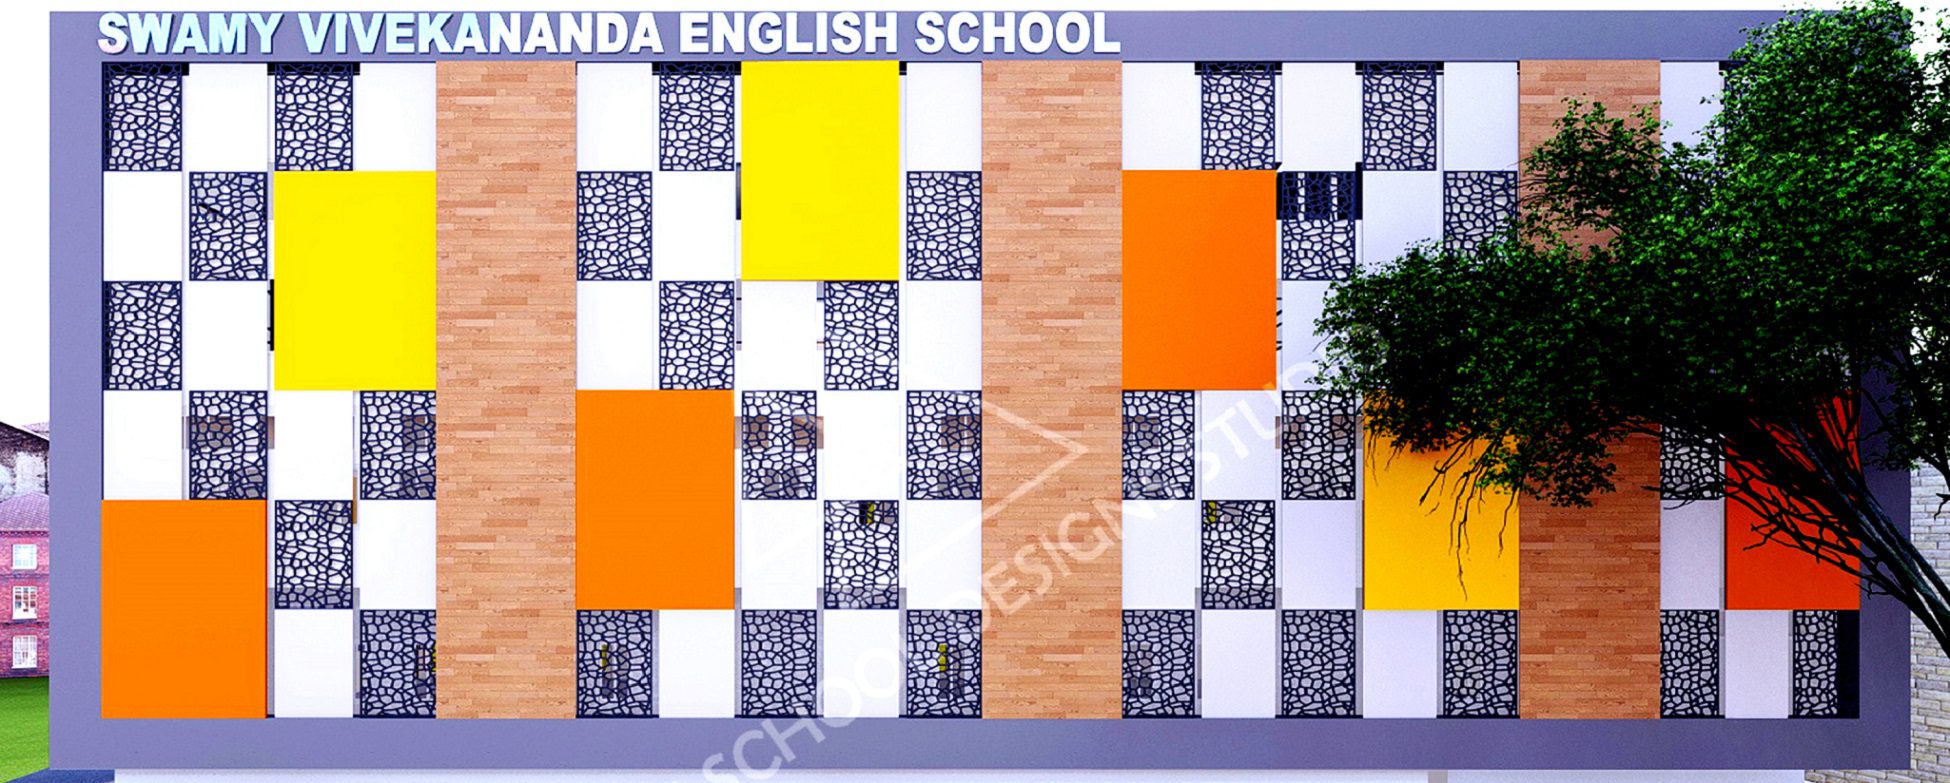 Swami Vivekananda English School, Shivamogga, Karnataka. School designed by The School Designs Studio. We are the top architecture firm that designs the best school designs in India.